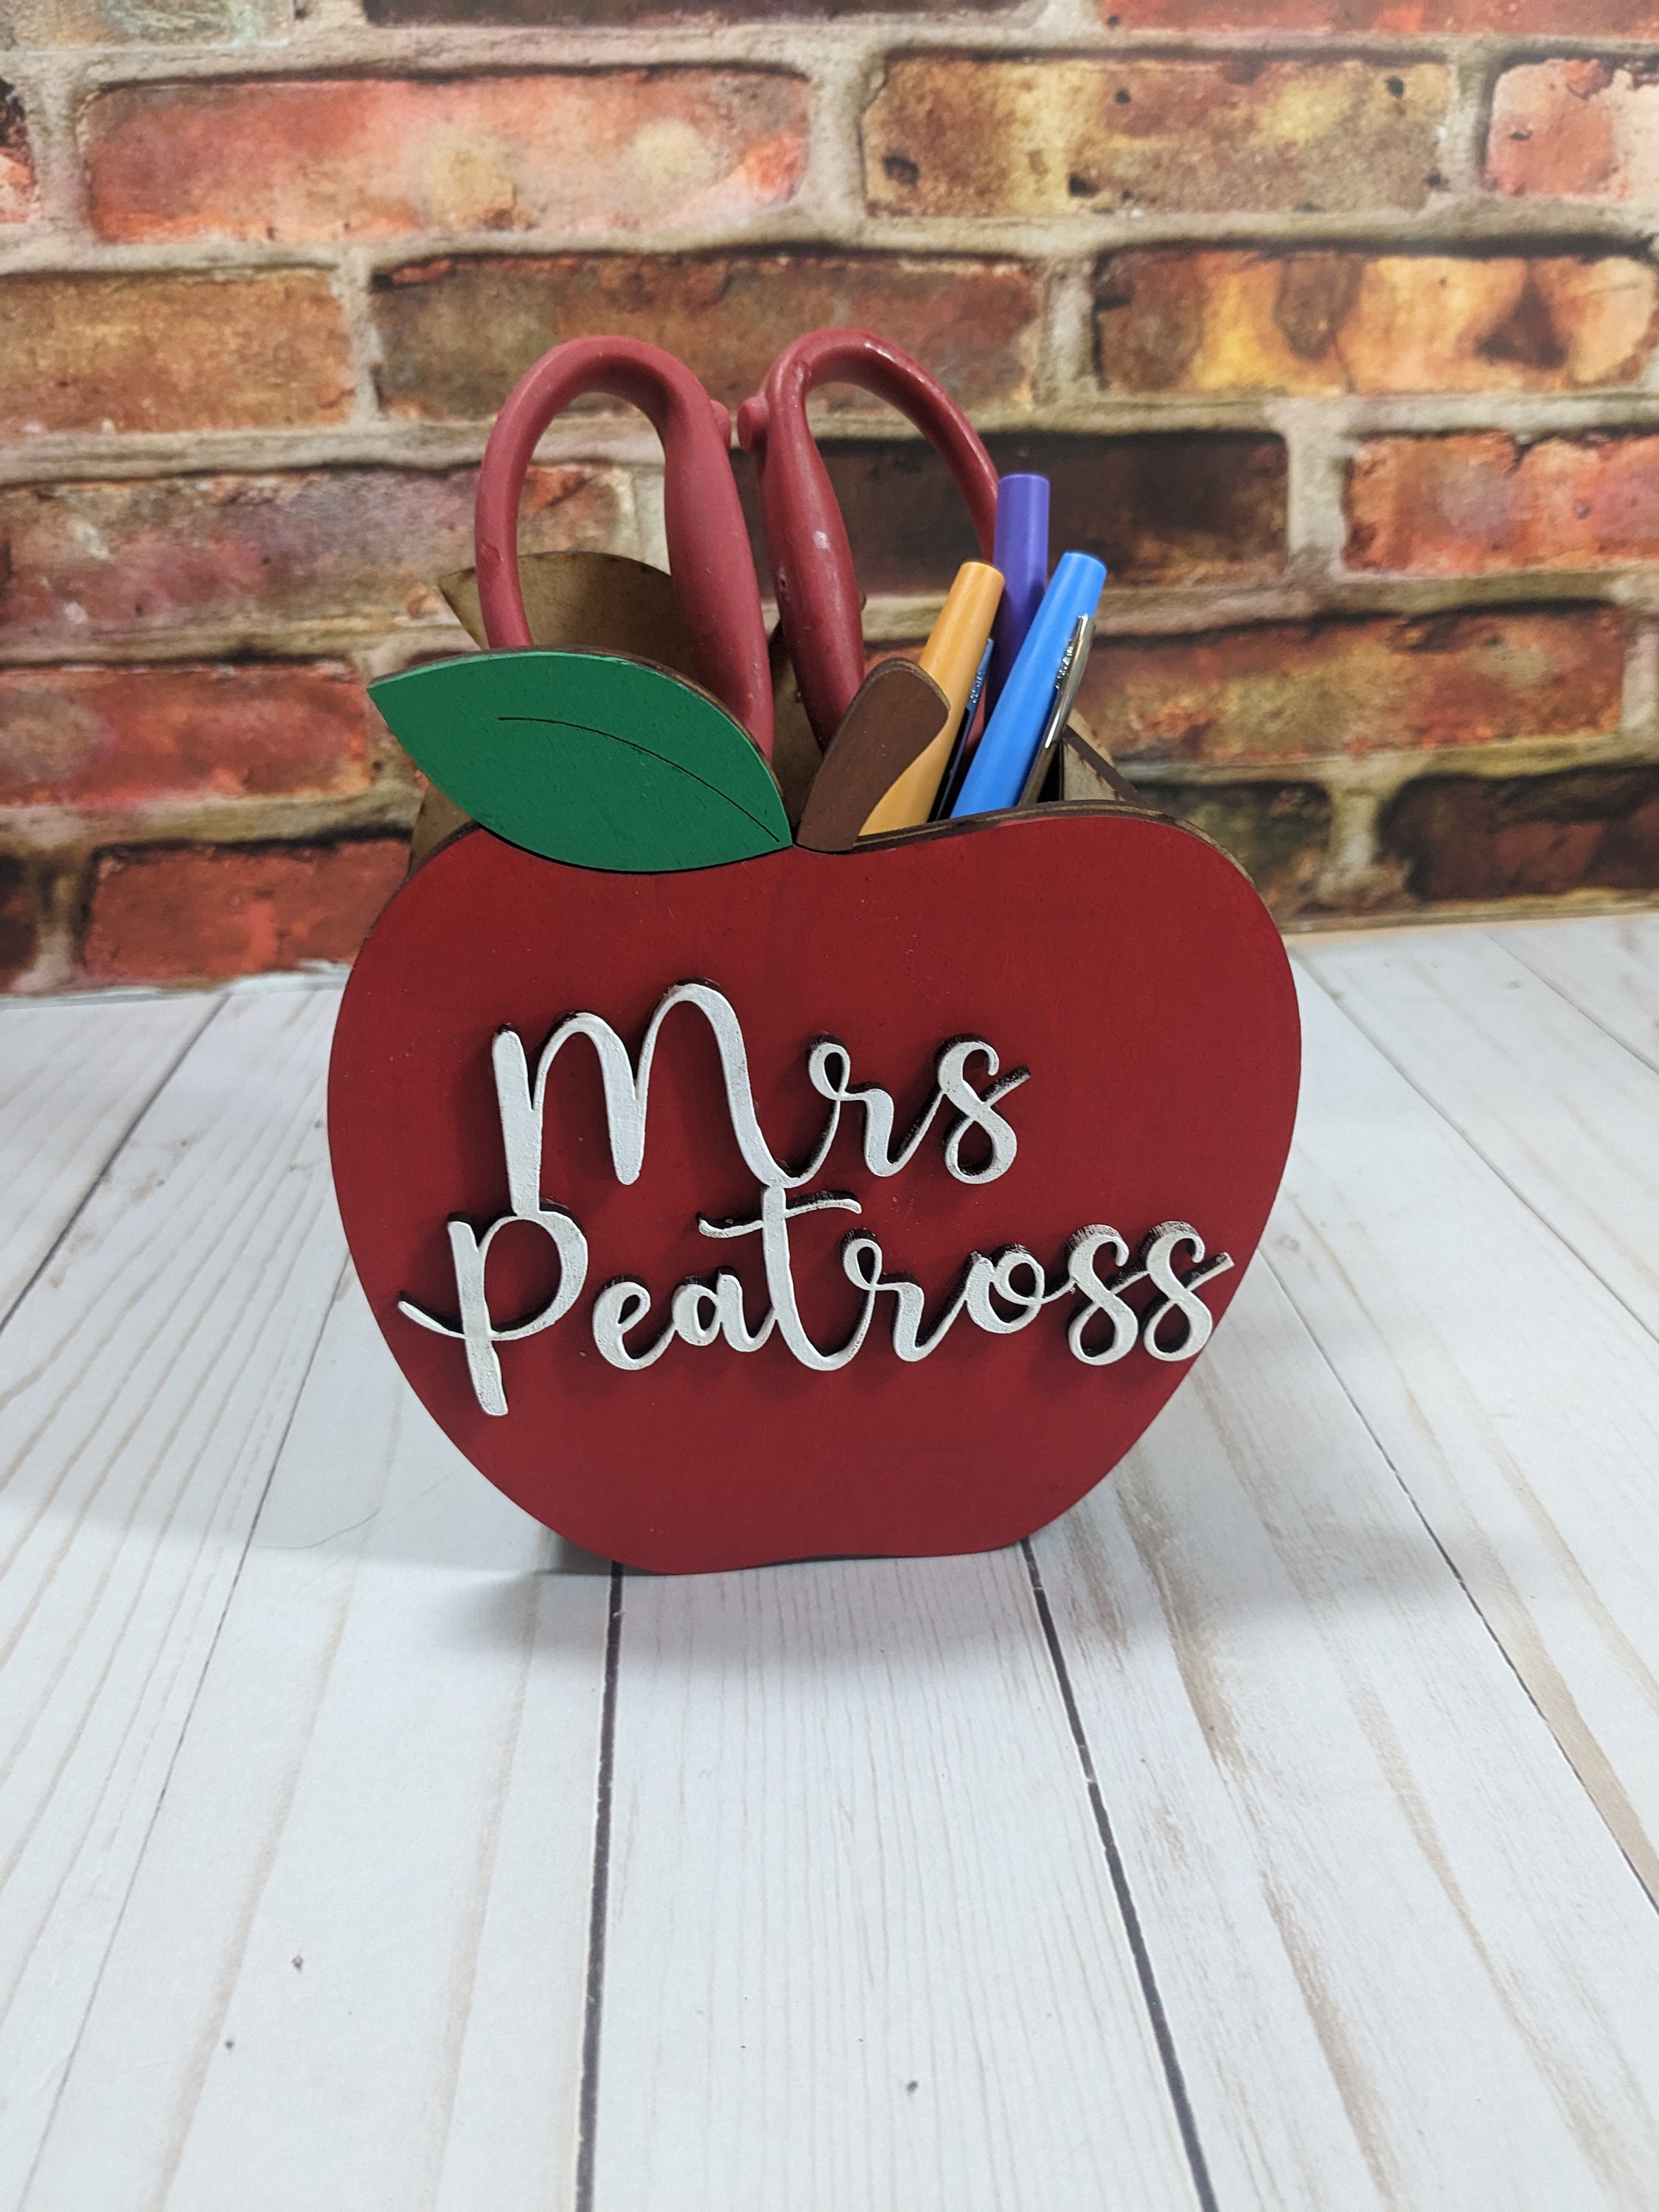 Personalised Teacher Pencil Case - Apple Teacher Design